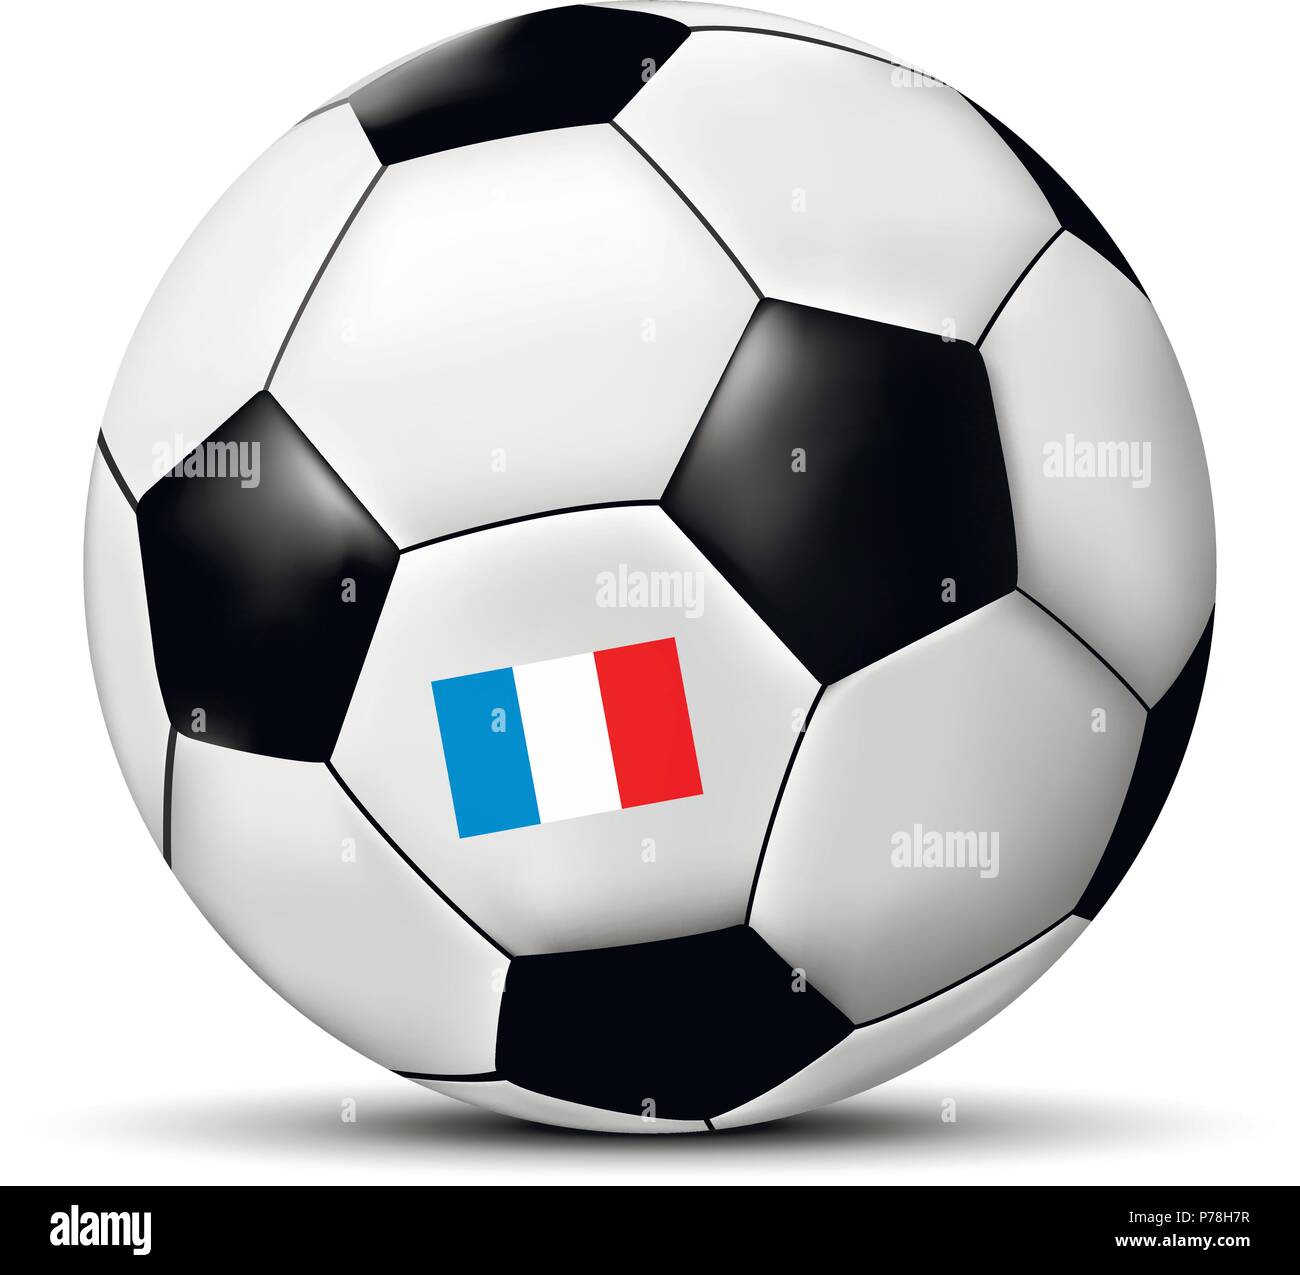 Football or soccer ball with France flag. Vector illustration. Stock Vector